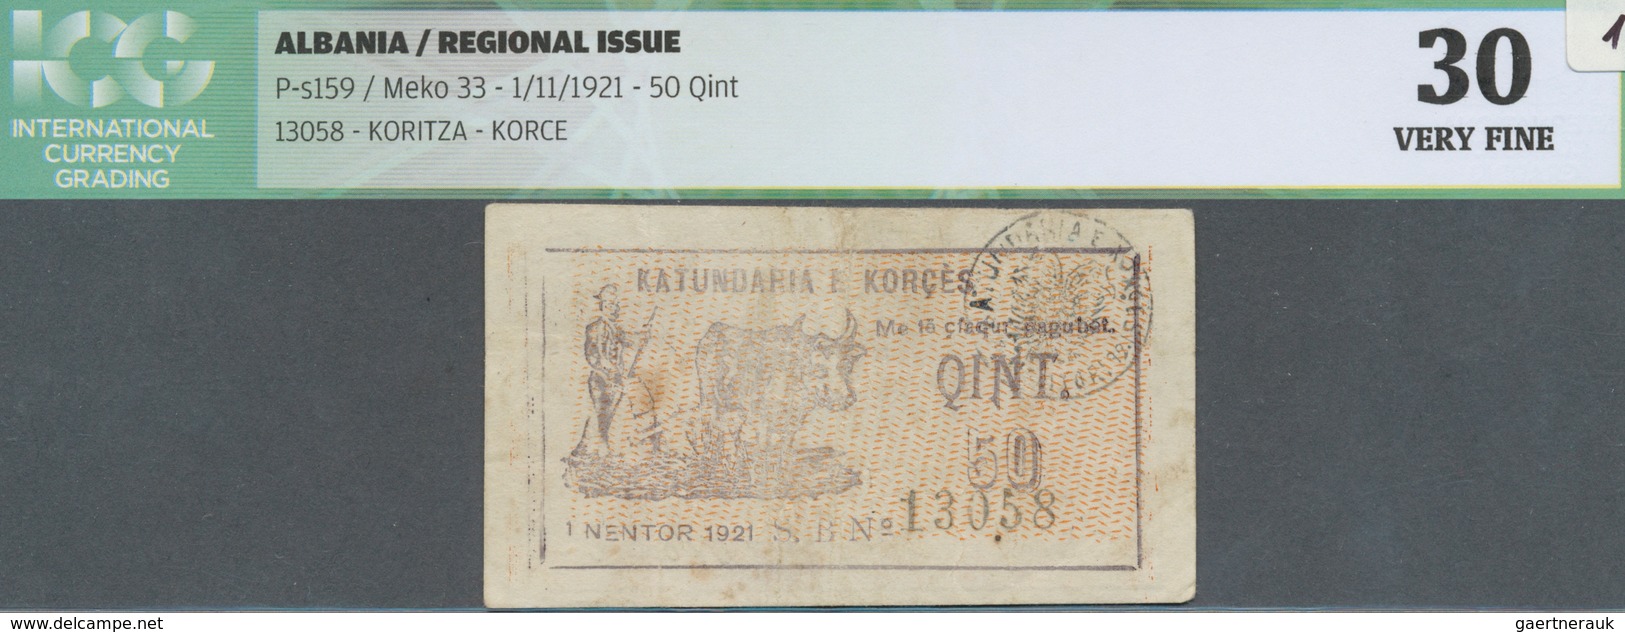 Albania / Albanien: Seldom Seen Regional Issue Of 50 Qint 01.11.1921 Koritza / Korce P. S159, Serial - Albanie